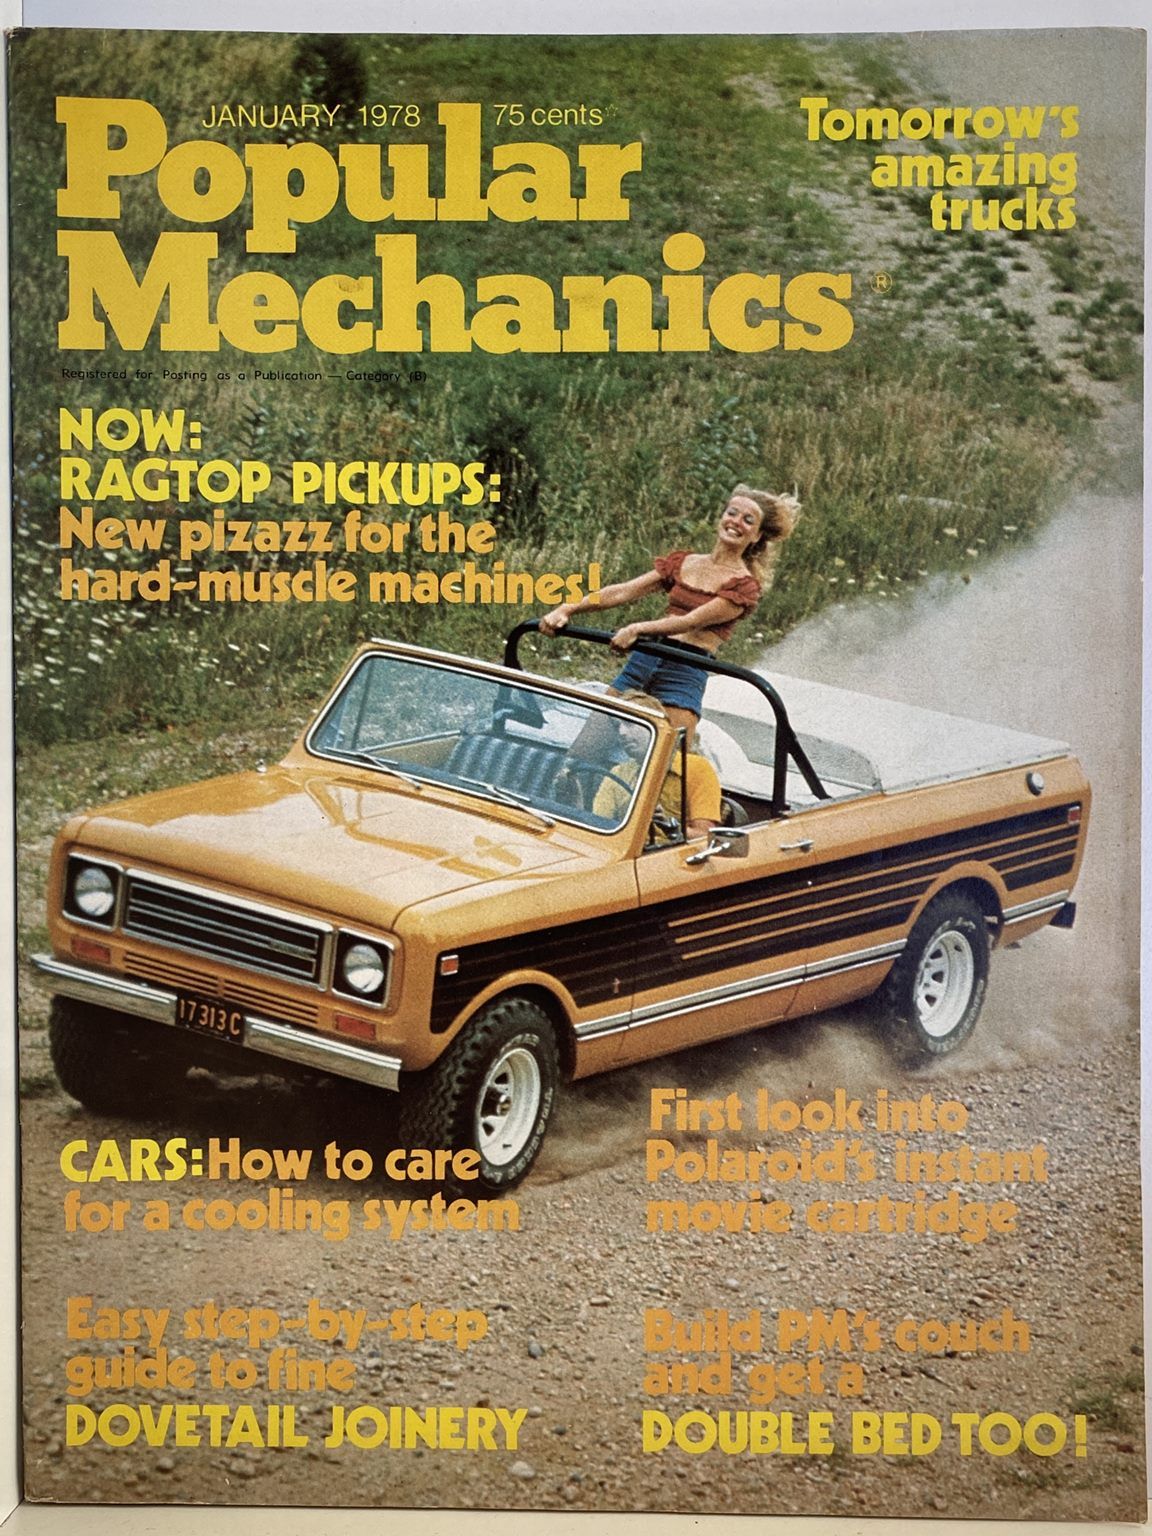 VINTAGE MAGAZINE: Popular Mechanics - Vol. 147, No. 4 - January 1978